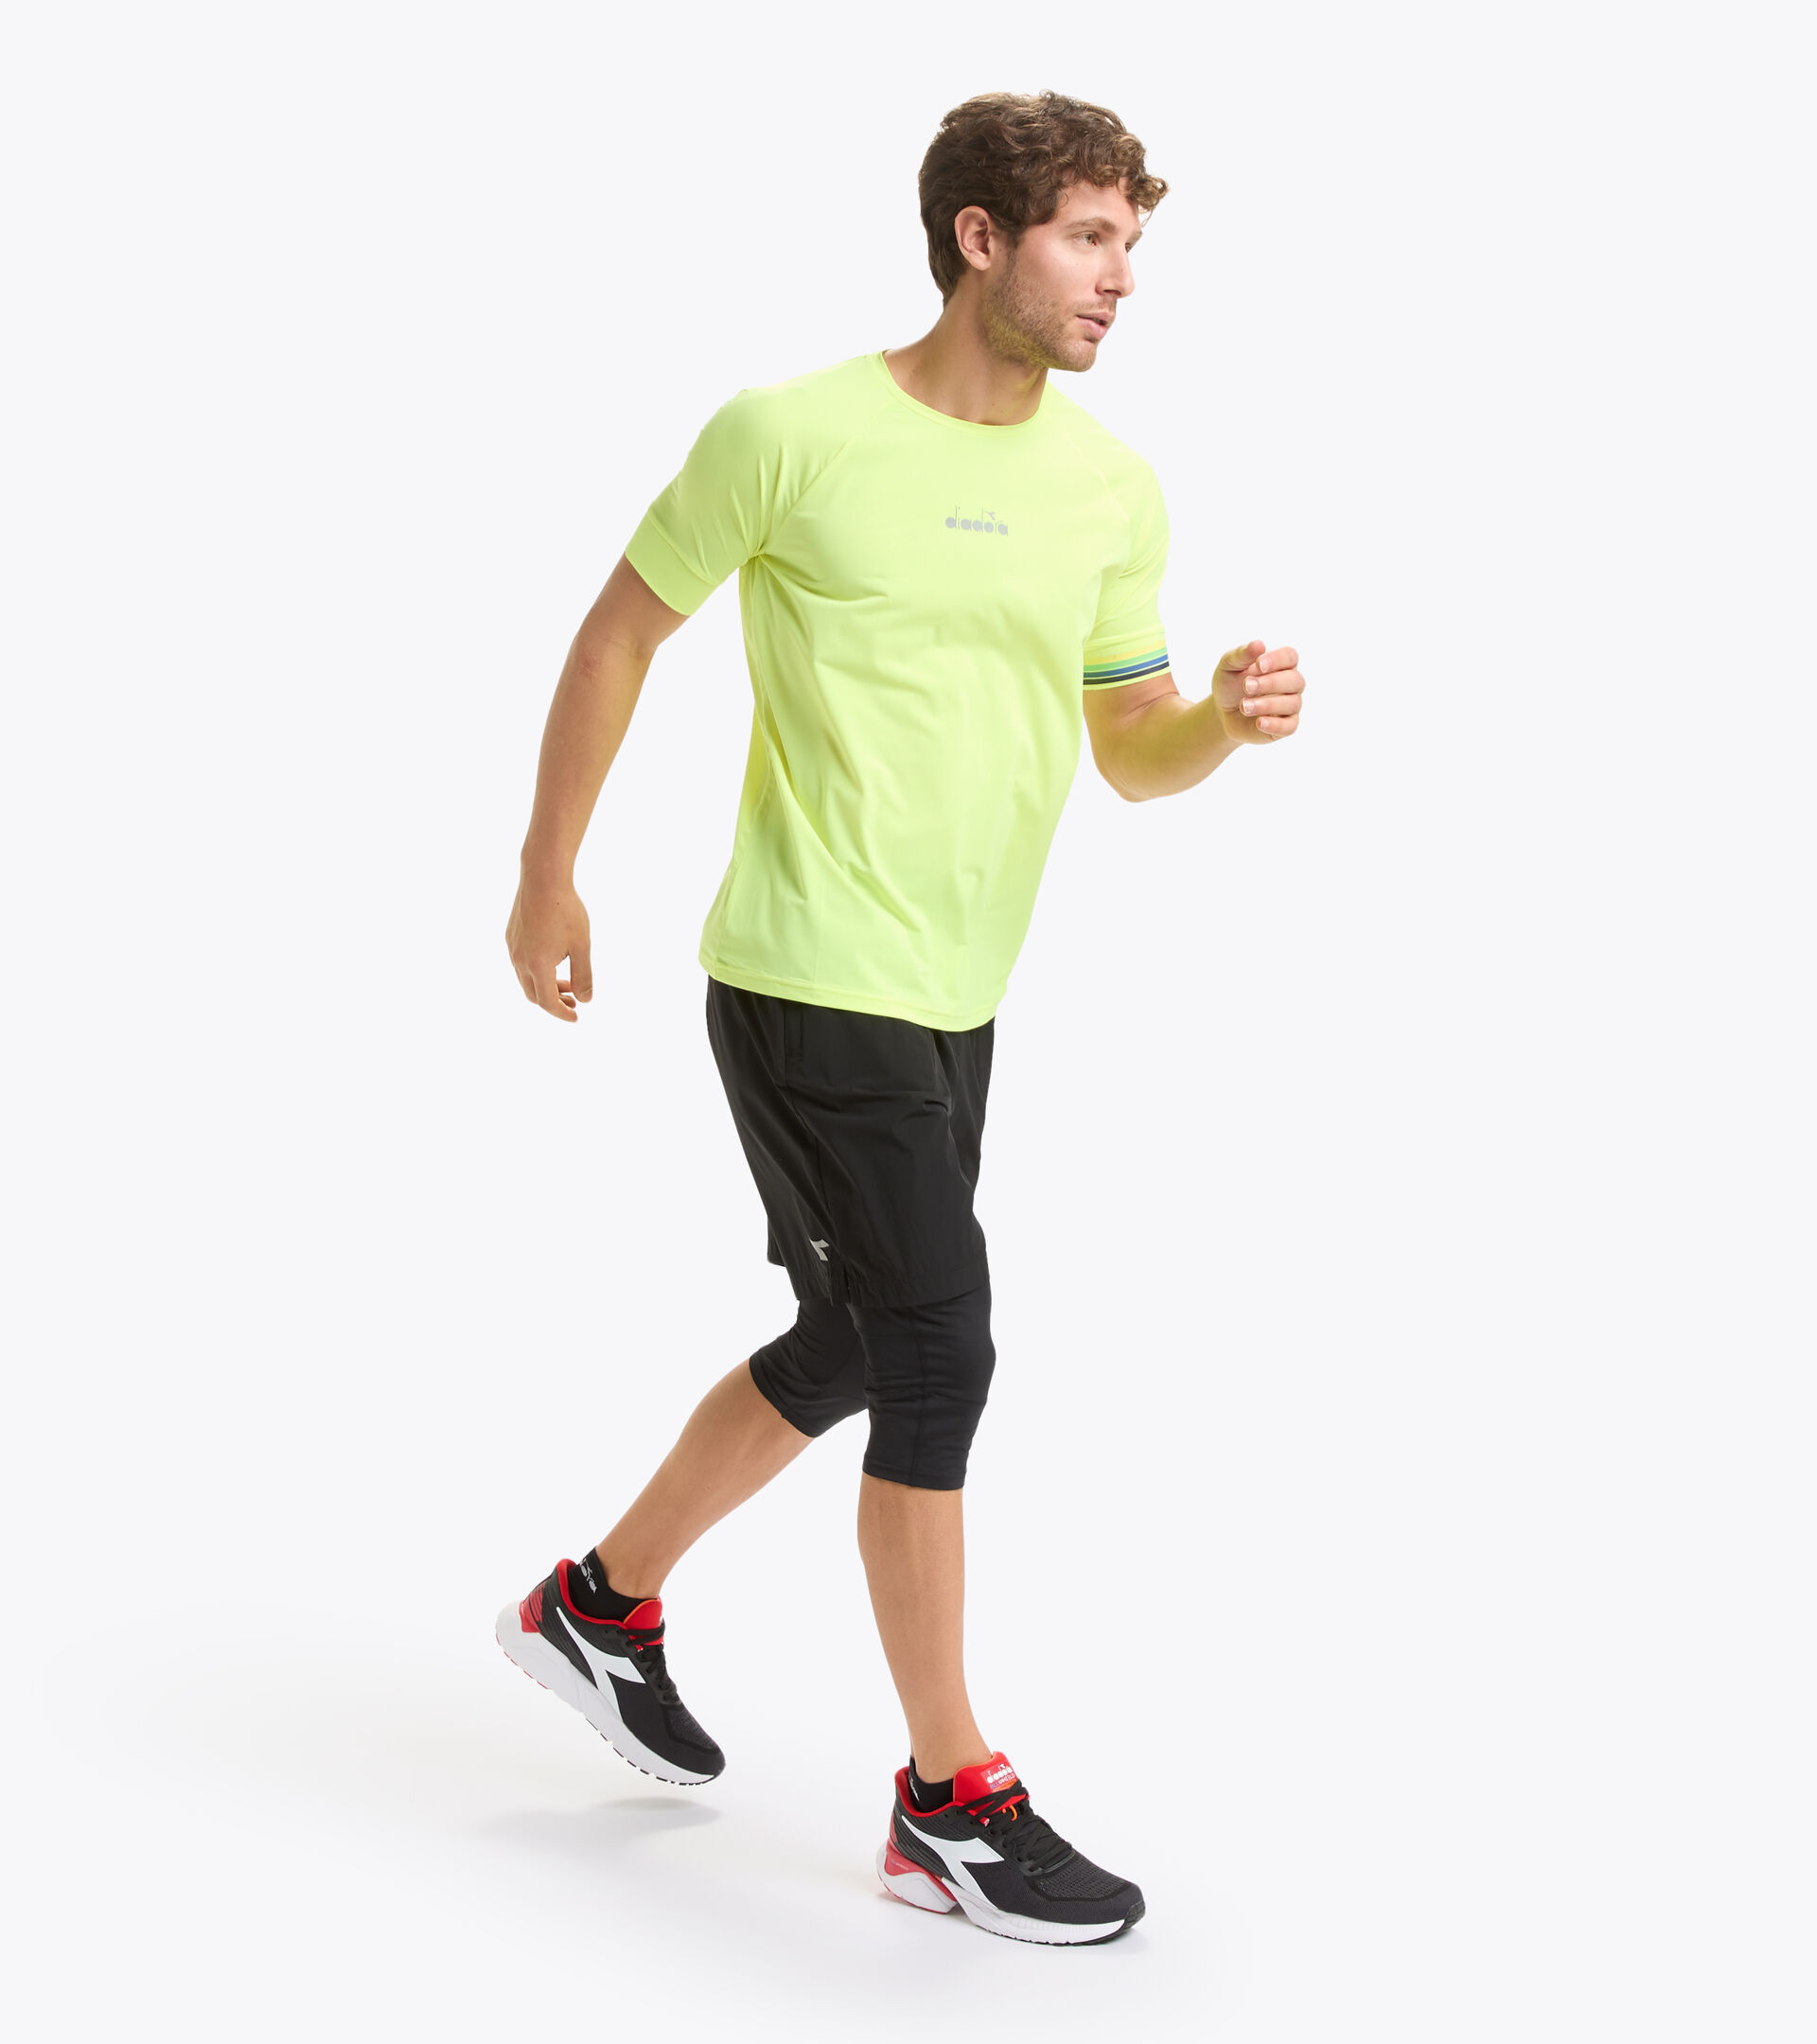 Store - POWER Leggings shorts GR running Men with set ONE Online SHORTS - detachable BE Diadora